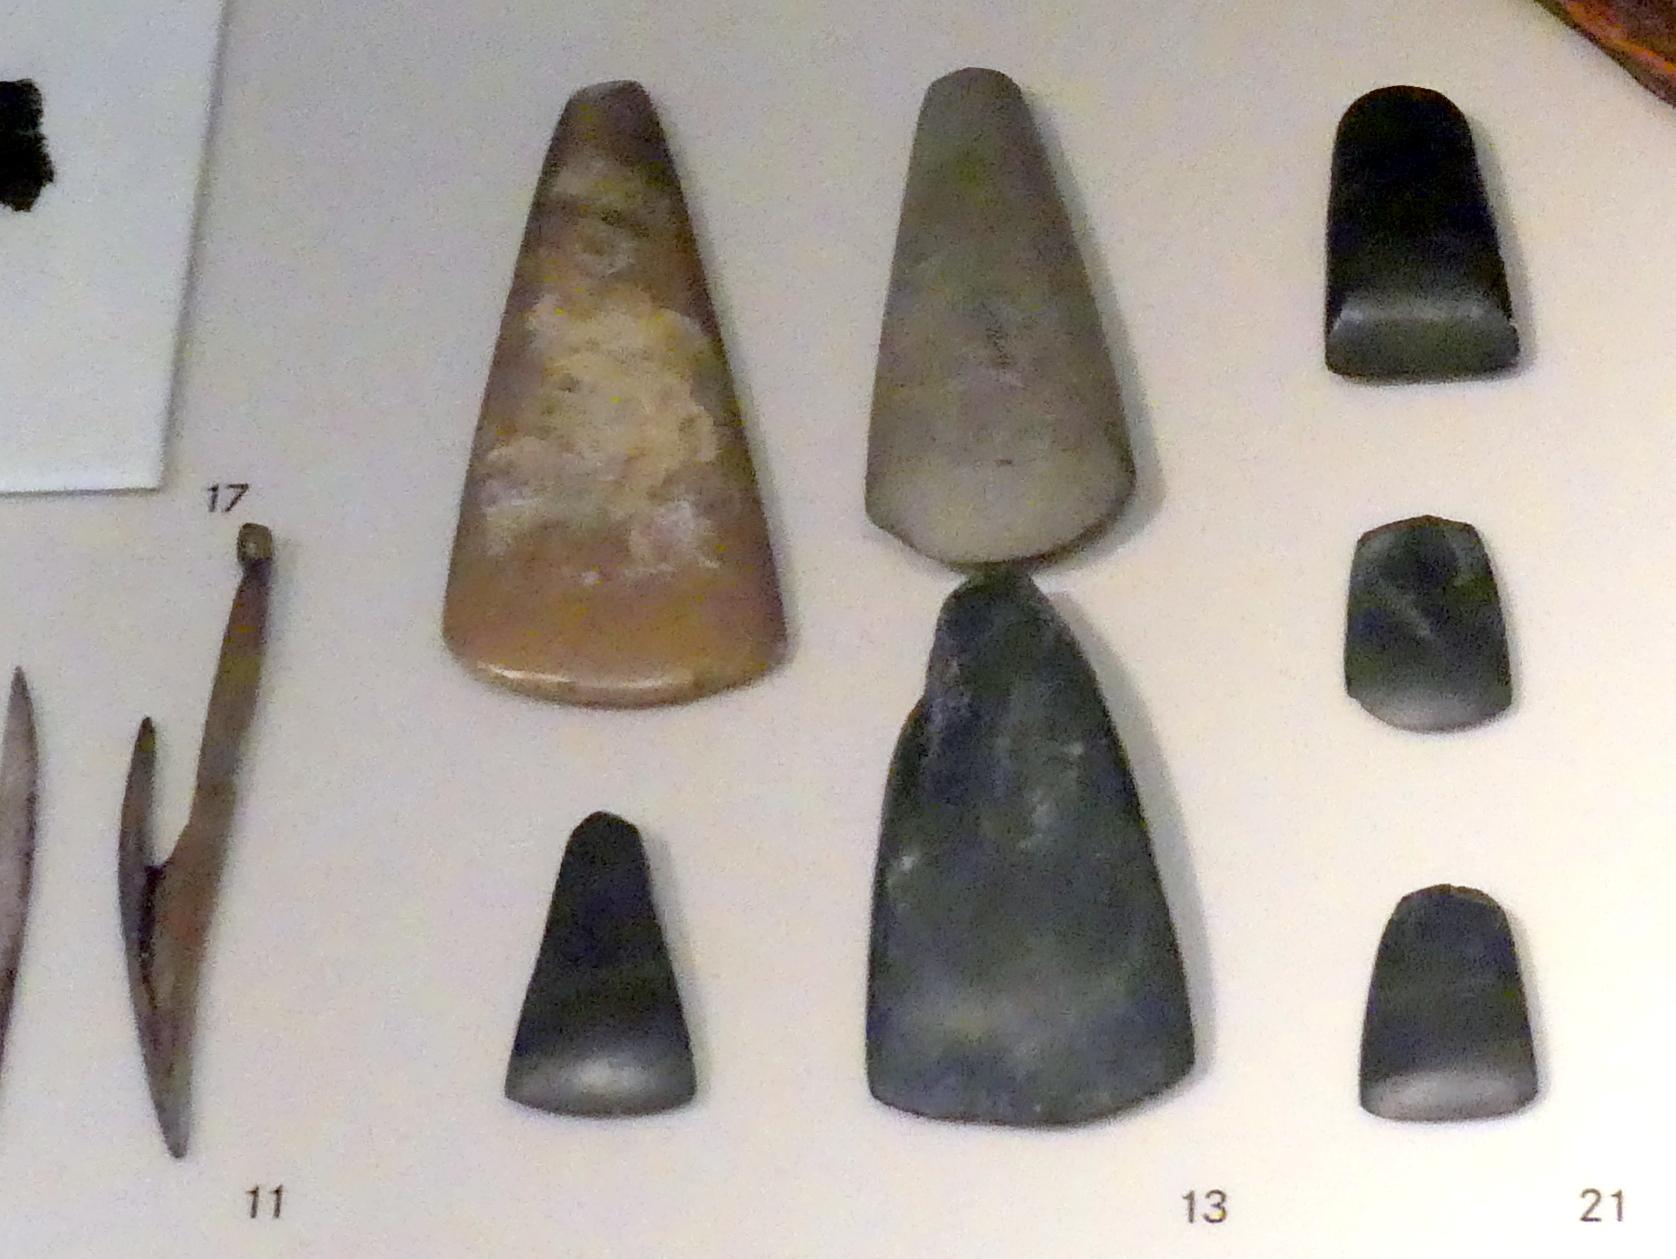 Beile, geschliffen, Jungneolithikum, 4400 - 3500 v. Chr., Spätneolithikum, Undatiert, 4400 - 2800 v. Chr.